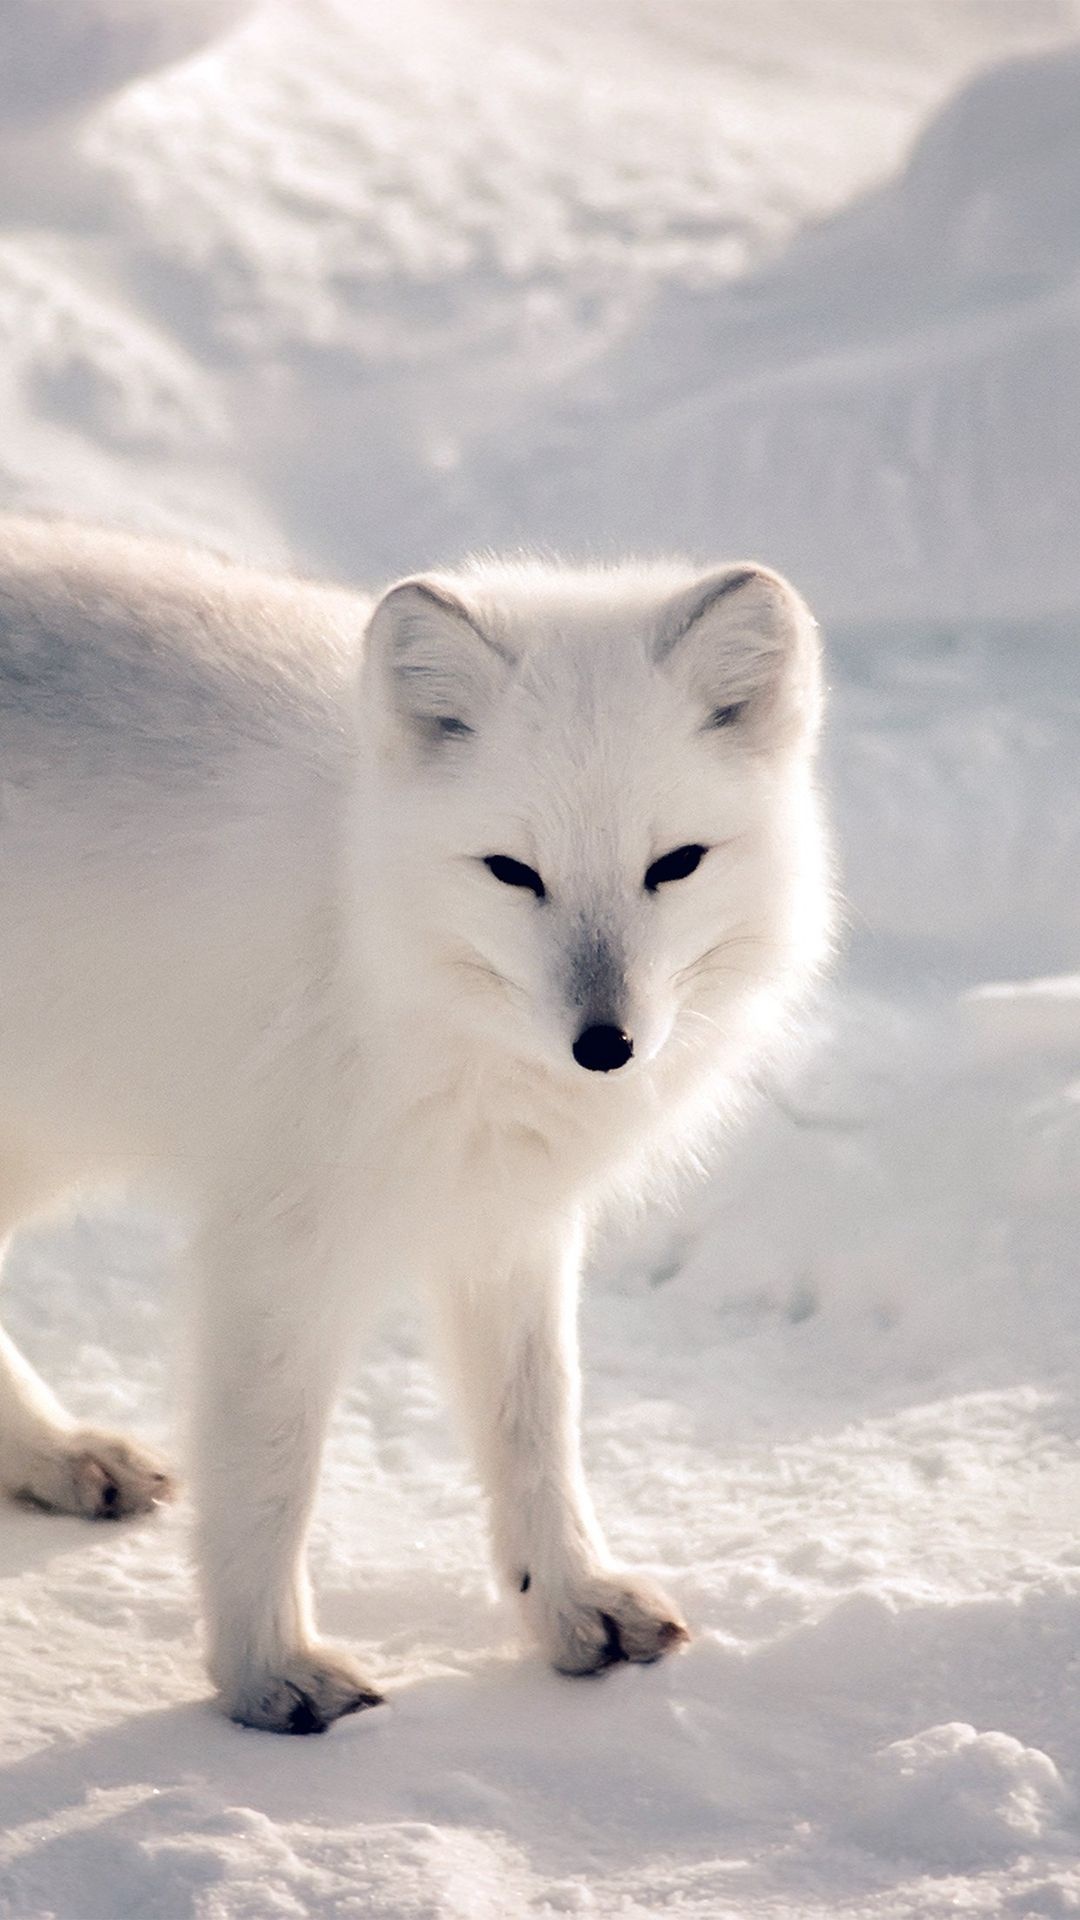 Snowy winter animal, Arctic fox beauty, iPhone wallpaper, Nature's gift, 1080x1920 Full HD Phone